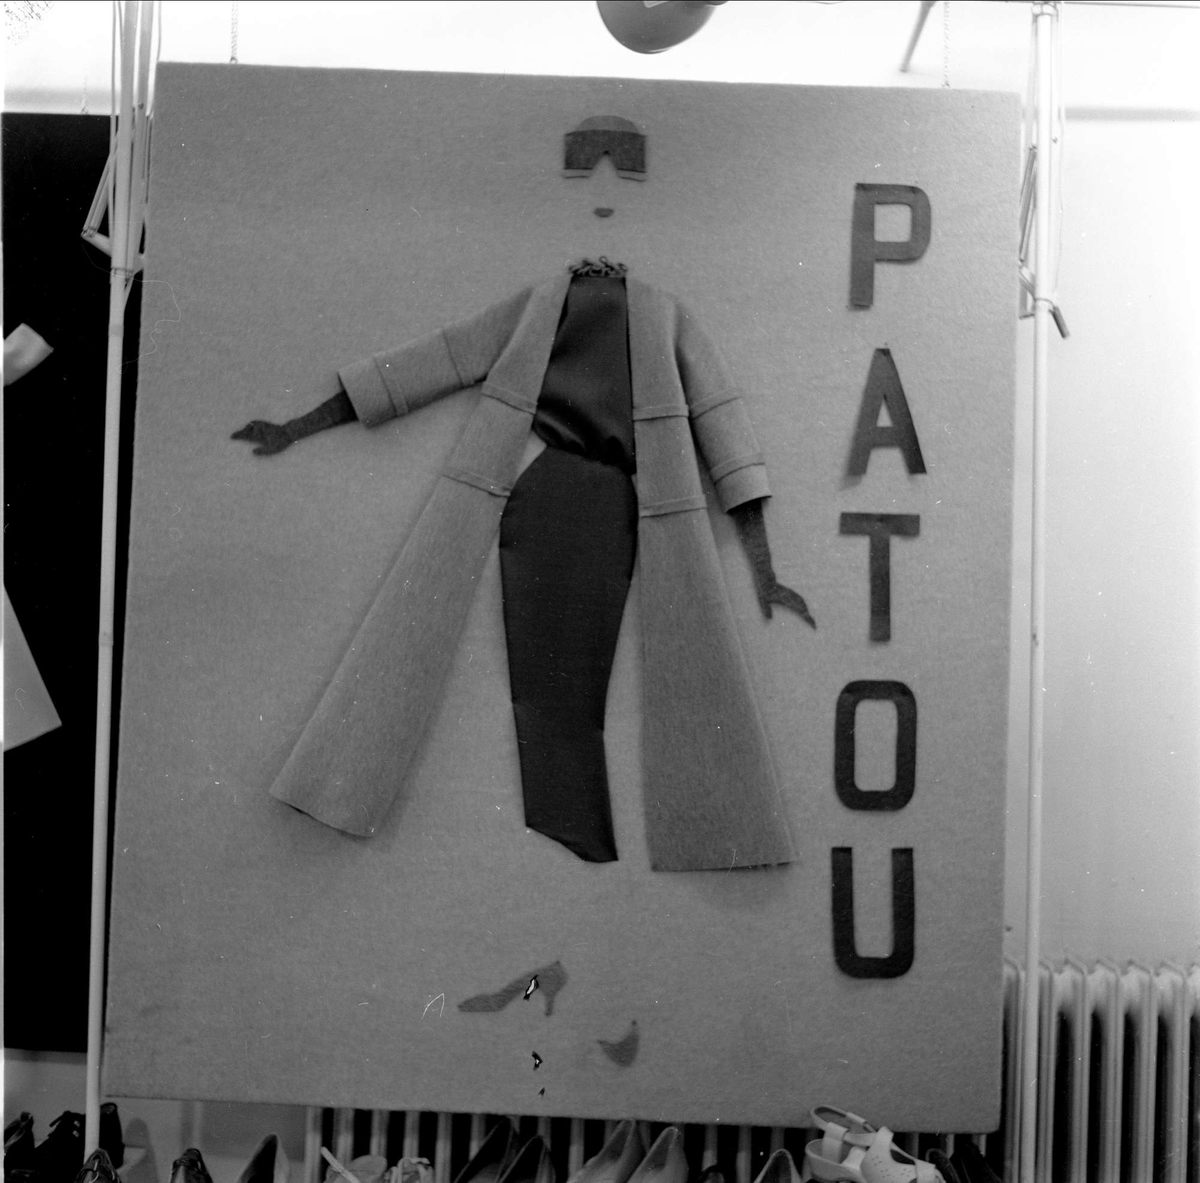 Reklameplakat for klær, tekst på plakat: PATOU. Norsk Mesteråd i sko og stoff, Oslo 07.04.1956.


